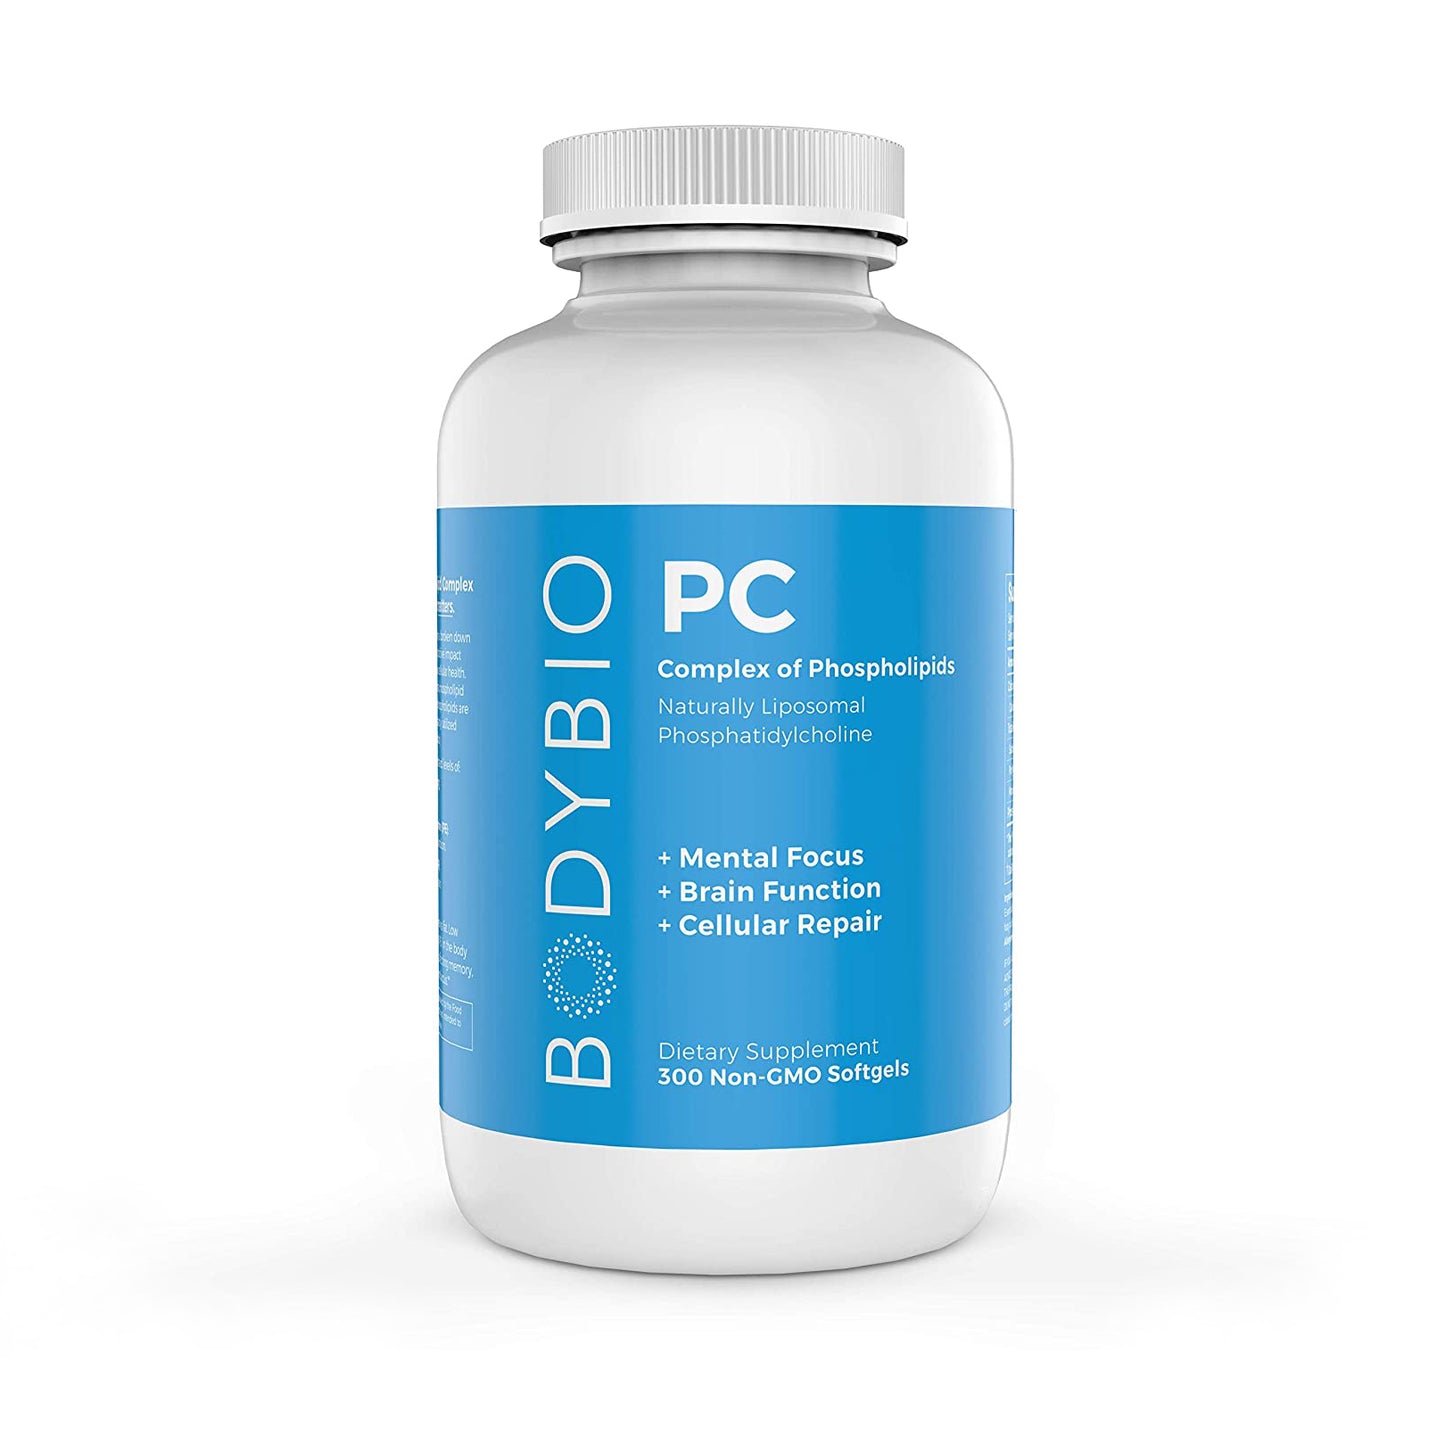 Brain Supplement 300 Softgels - Pure Phospholipid Complex for Healthy Aging -Enhance Focus, Brain Function, Cellular Repair